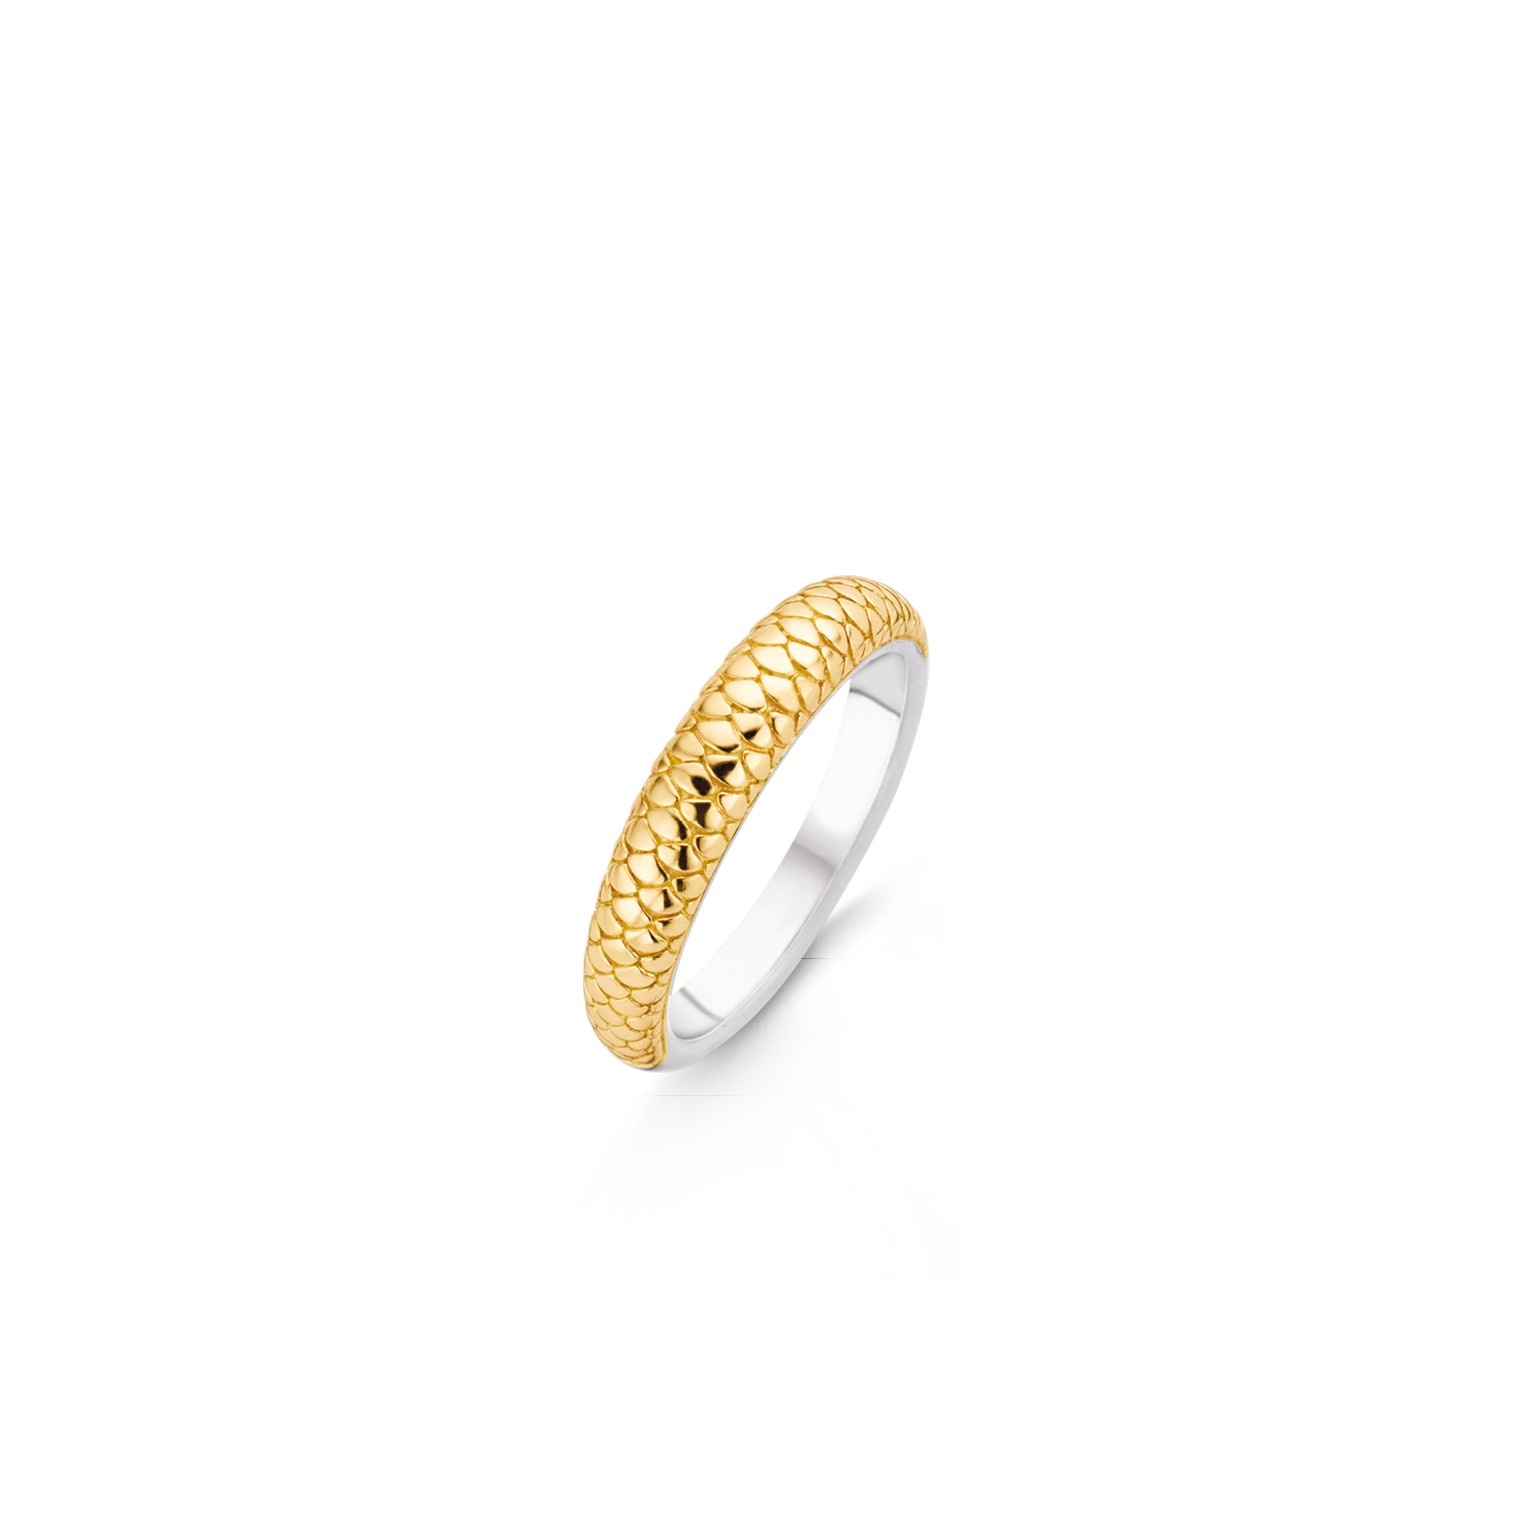 TI SENTO - Milano Ring 12164SY Gala Jewelers Inc. White Oak, PA